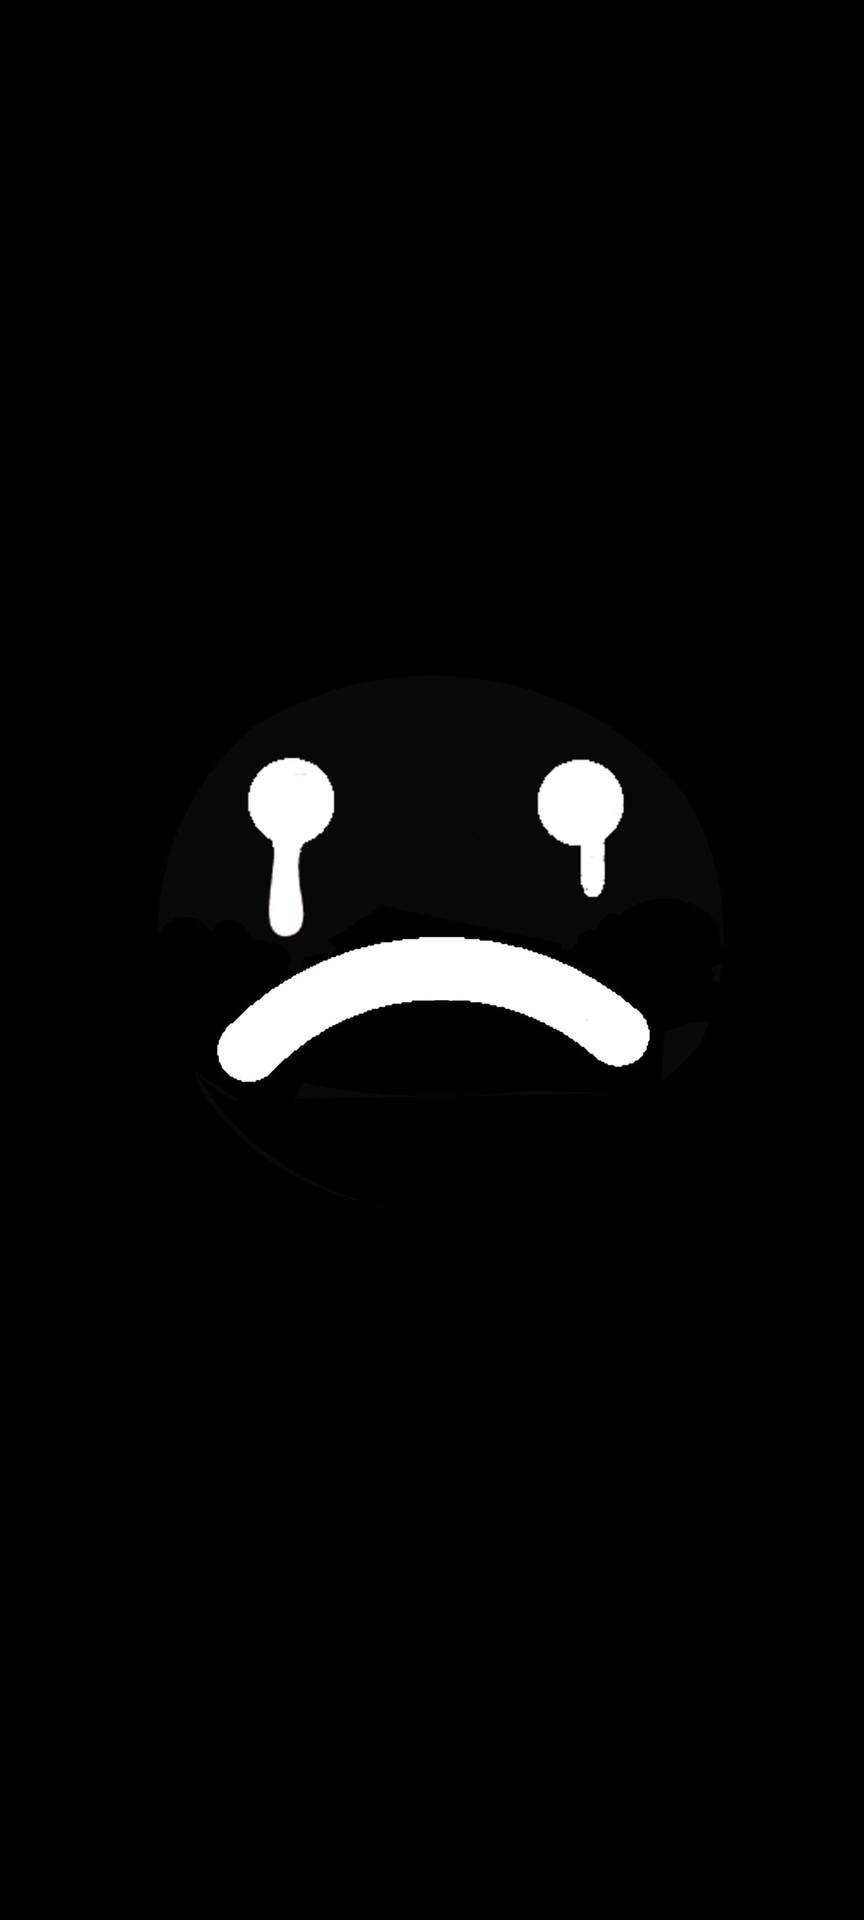 Plain Sad Boy Cartoon Emoji Art Wallpaper